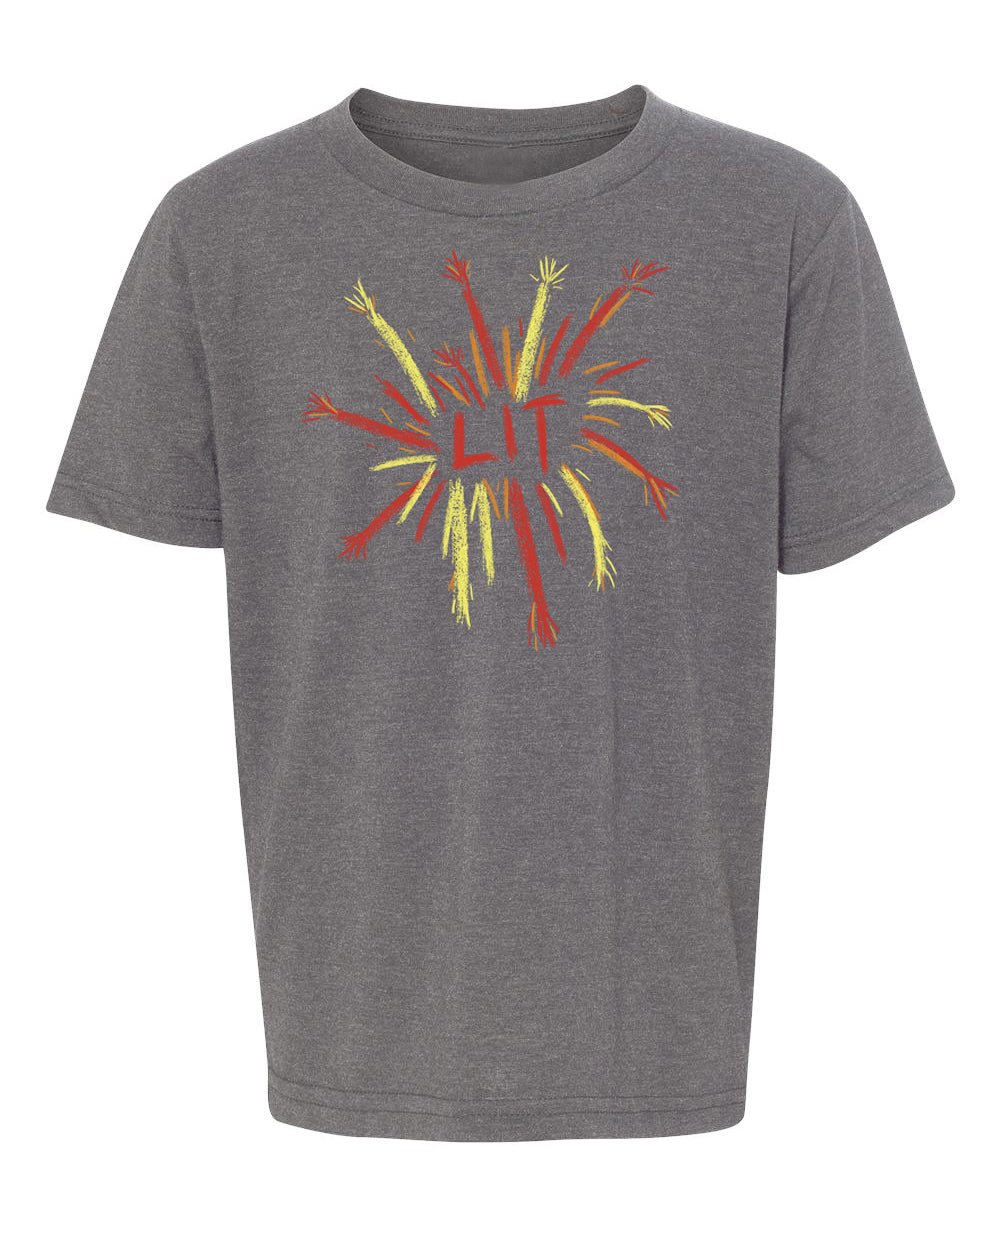 Lit Fireworks Kids 4th of July T Shirts - Mato & Hash